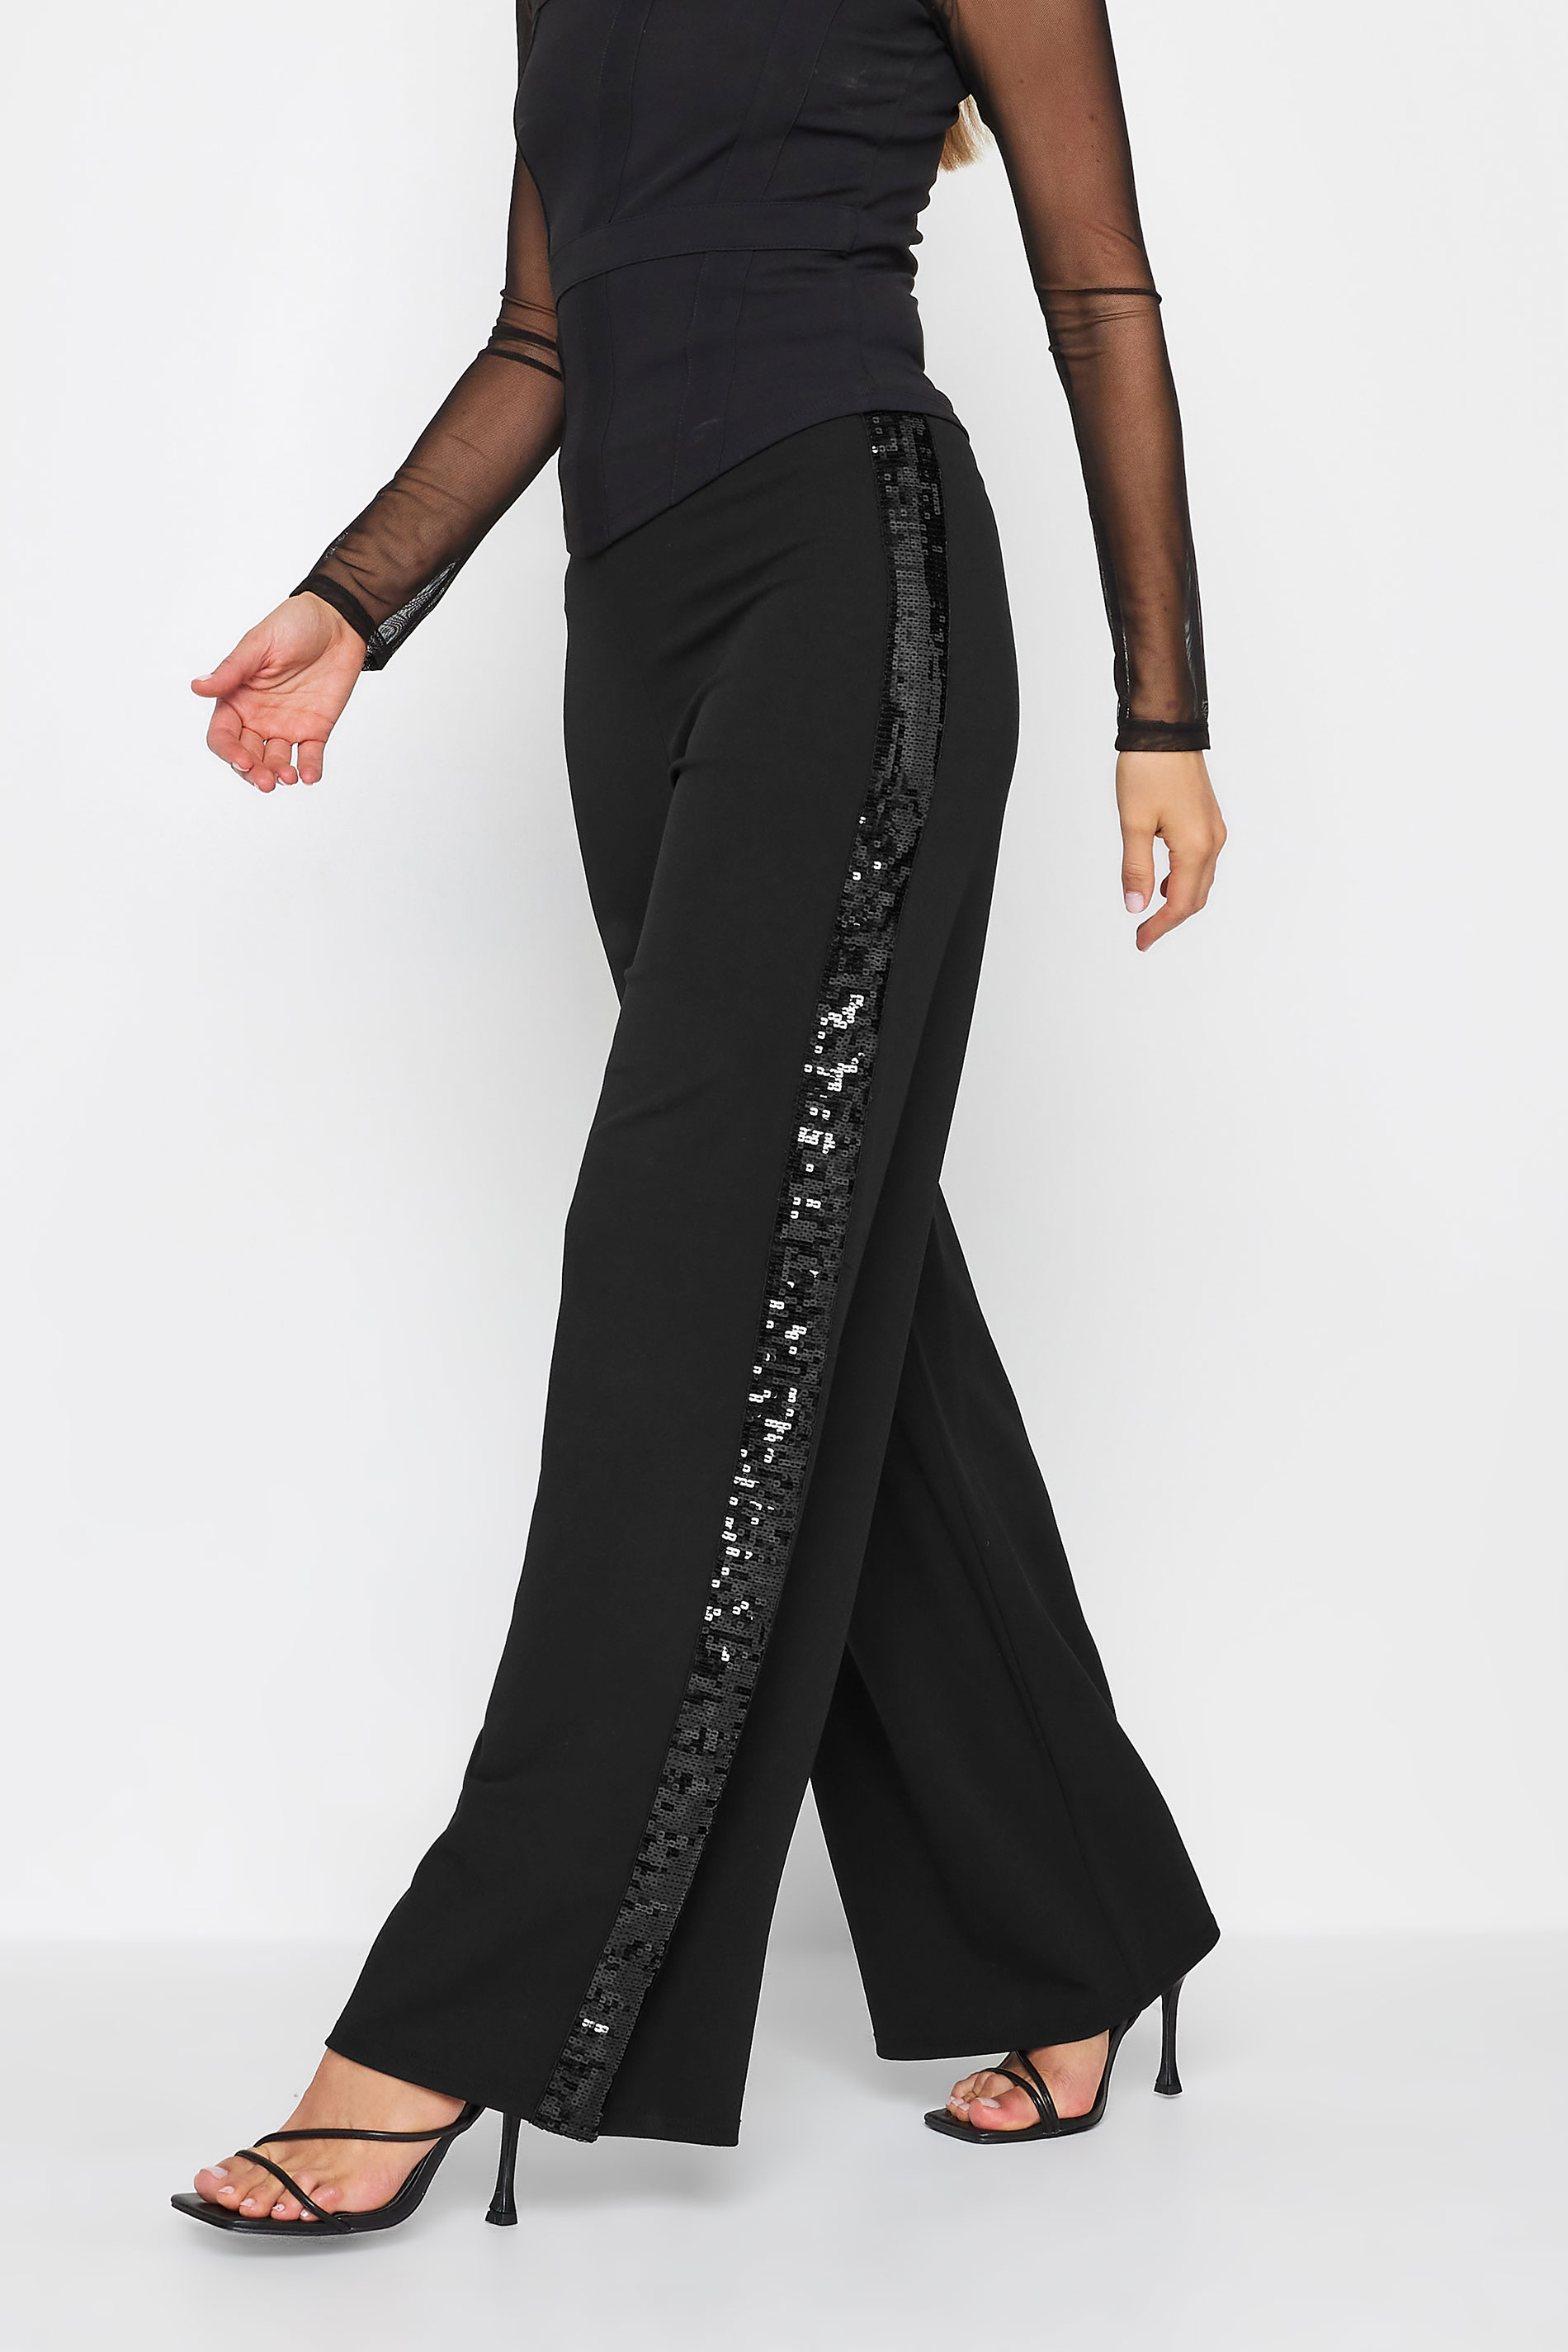 LTS Tall Black Sequin Stripe Wide Leg Trousers | Long Tall Sally  1